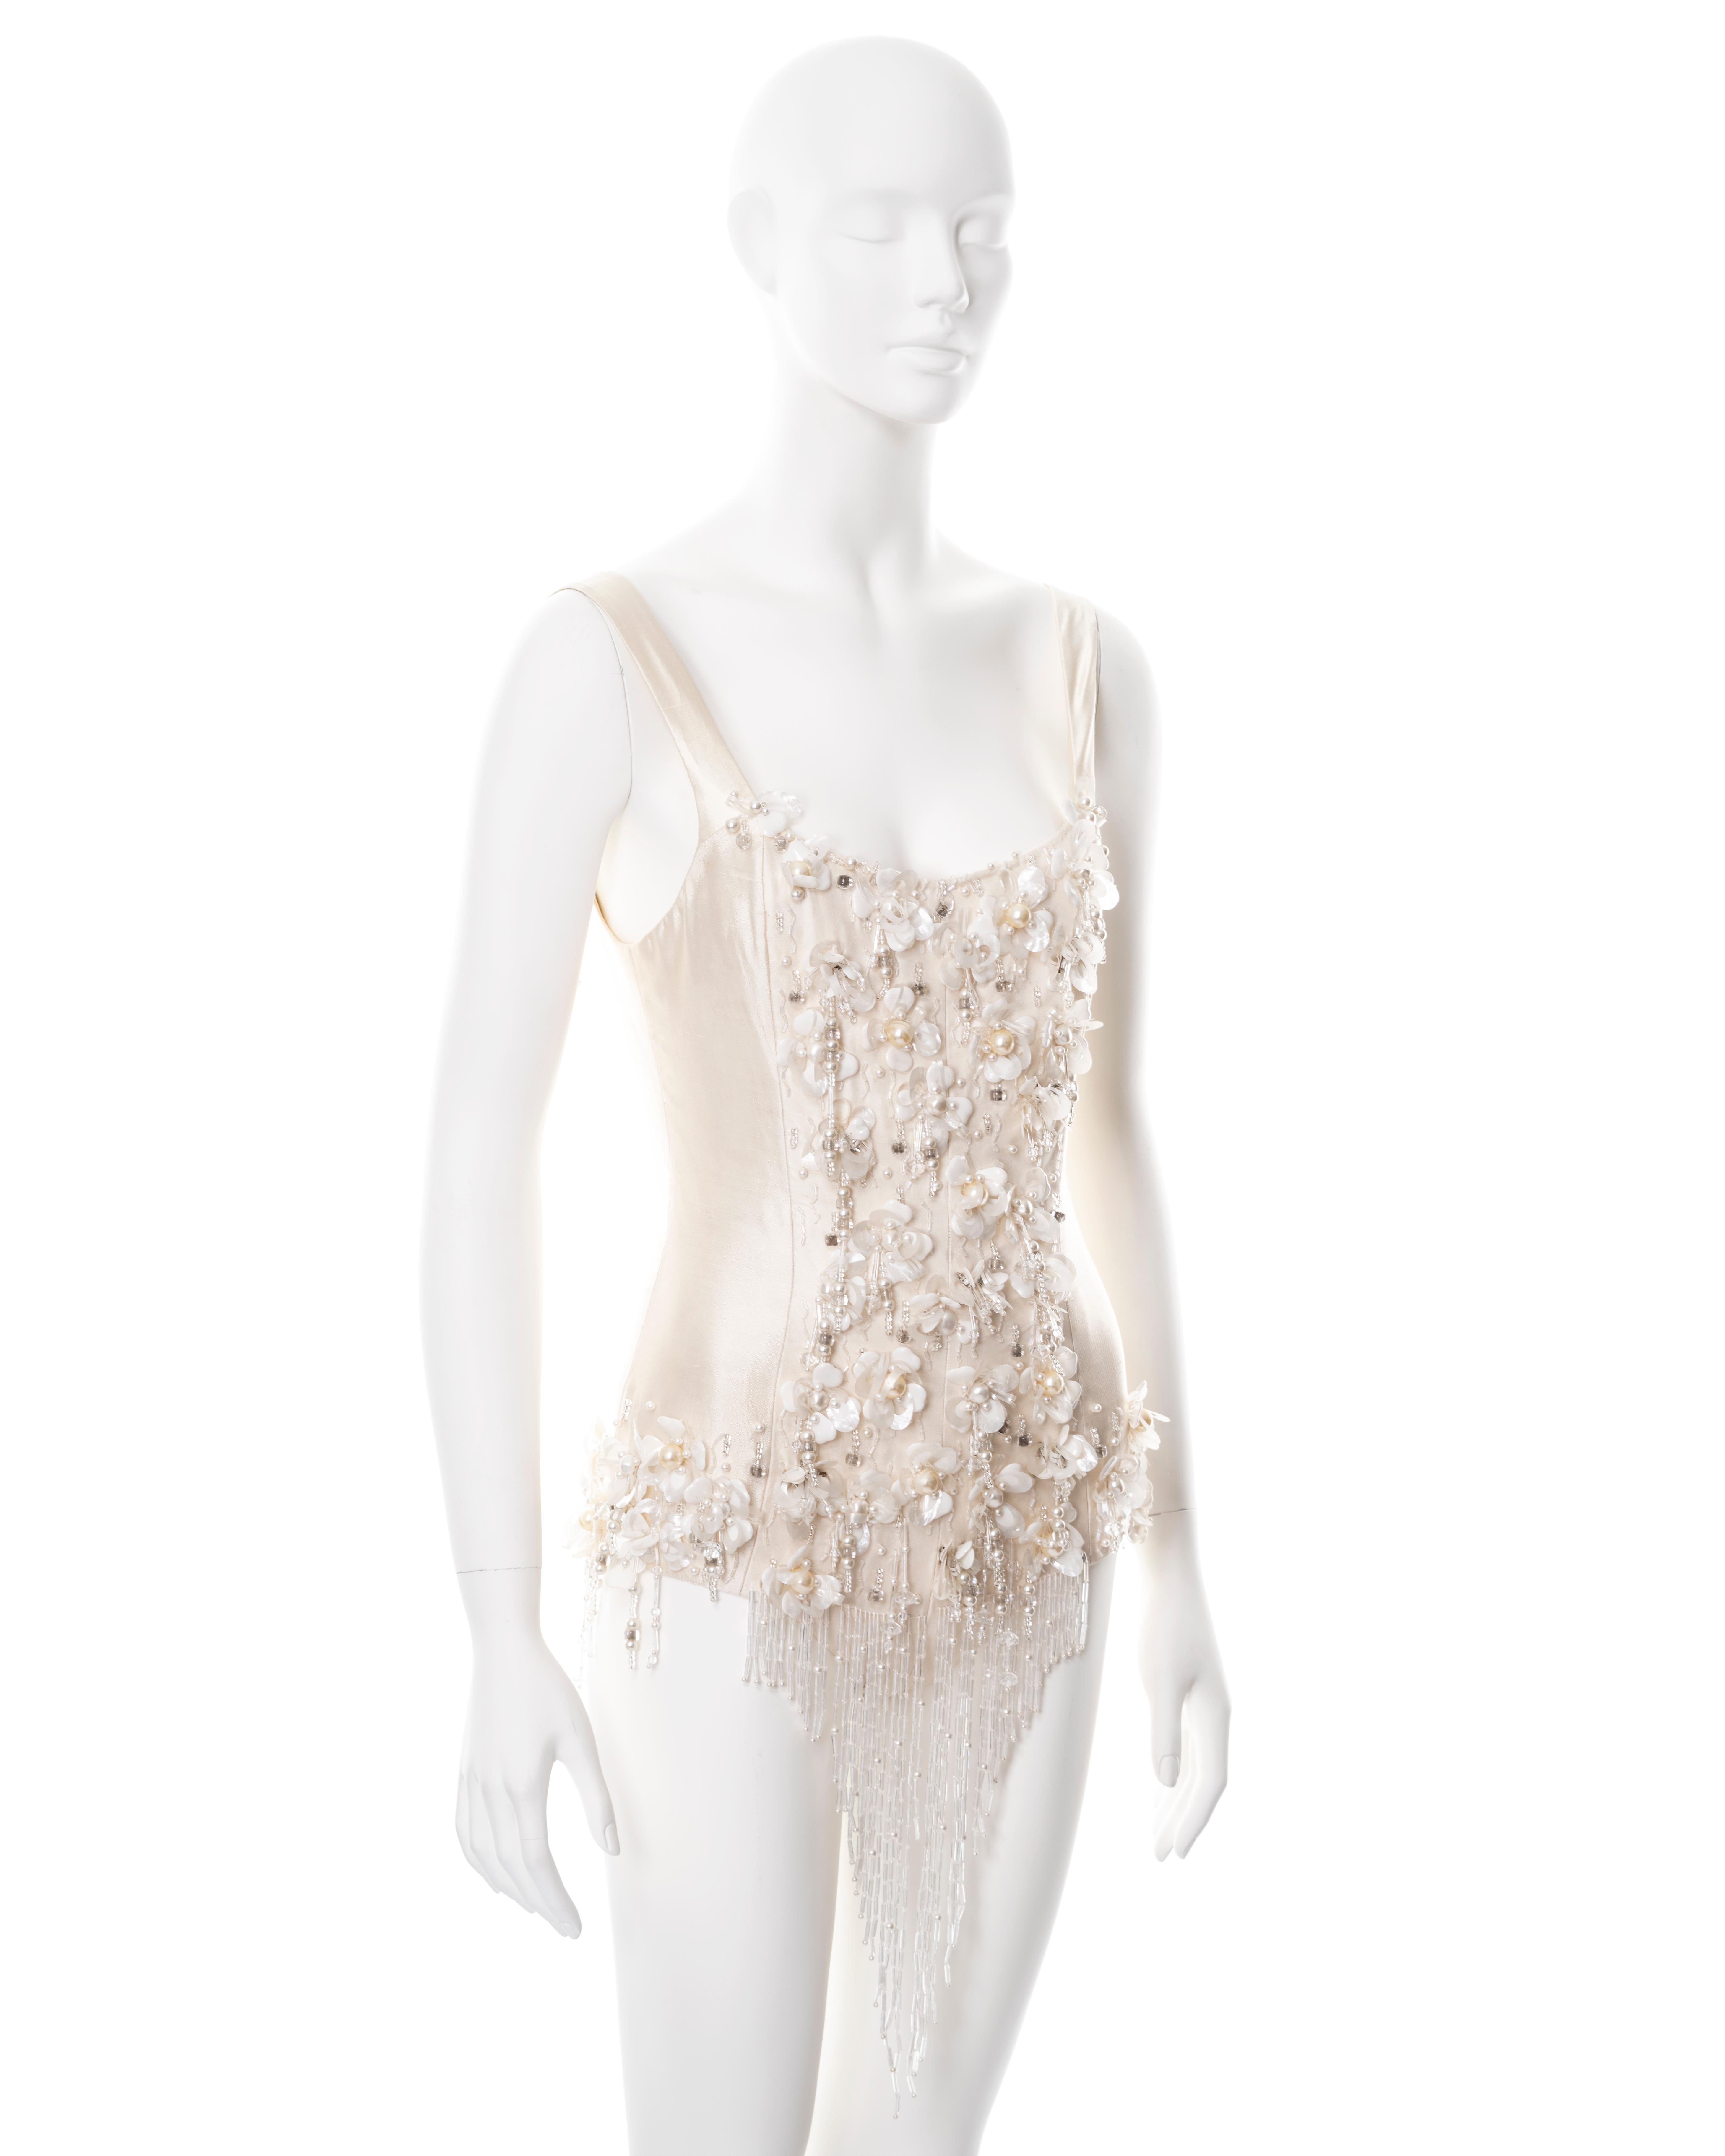 Women's  Chloé by Martine Sitbon floral embellished ivory silk bodysuit, ss 1991